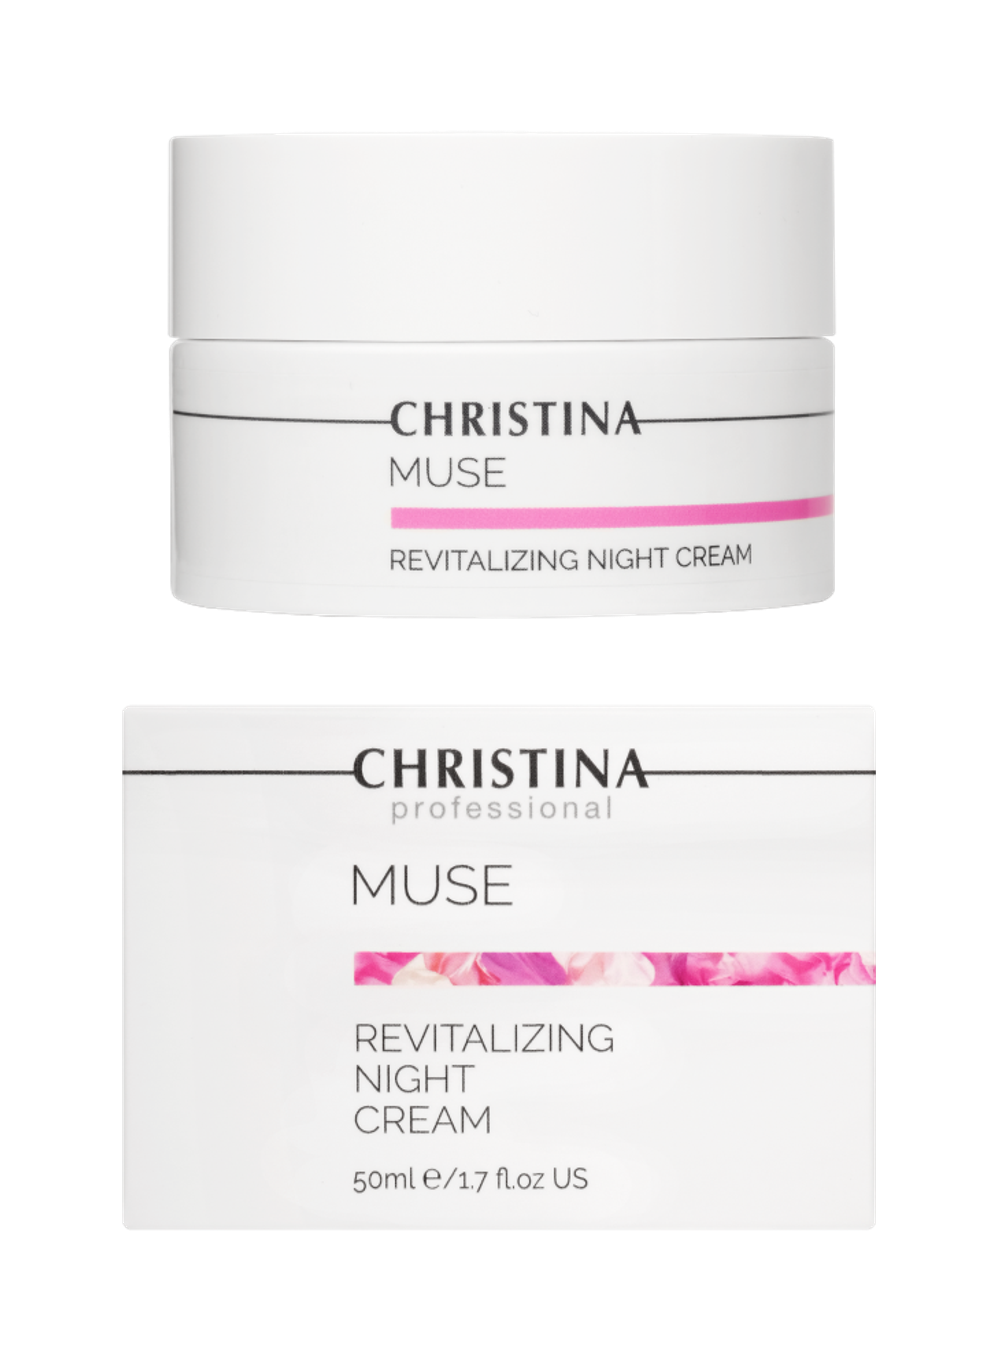 CHRISTINA Muse Revitalizing Night Cream